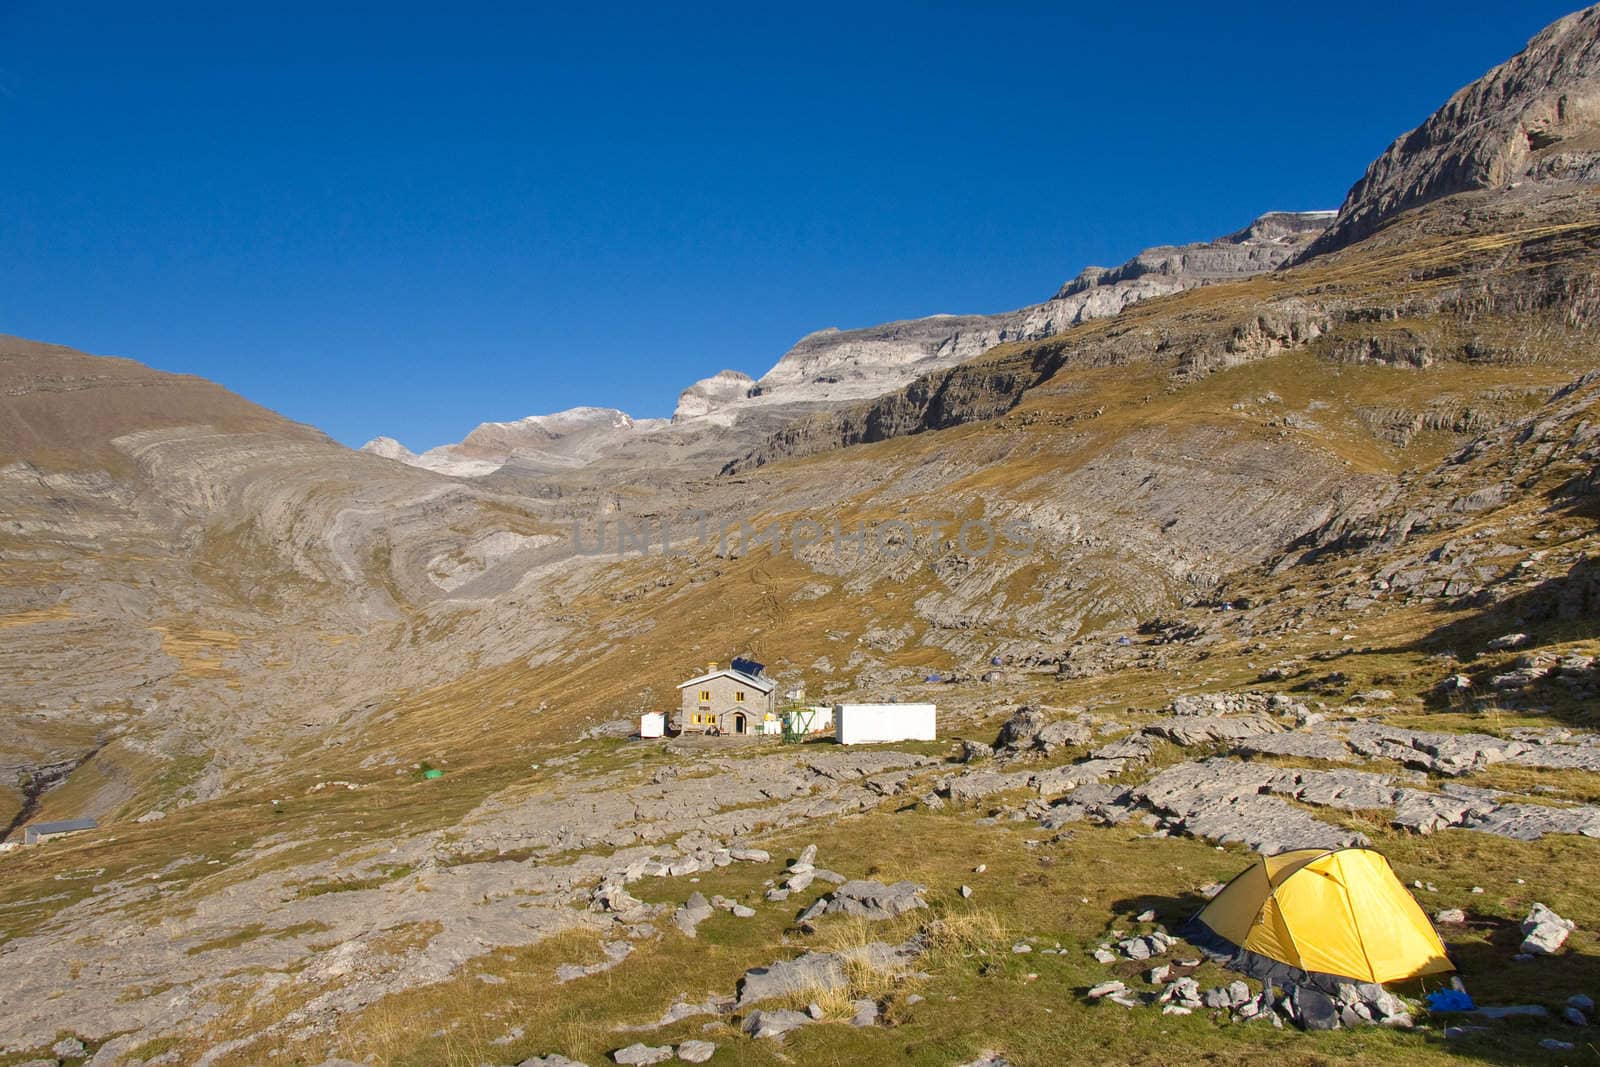 Yellow tent and in background refuge Goriz and monte Perdido massif. Ordesa National Park - Spain.